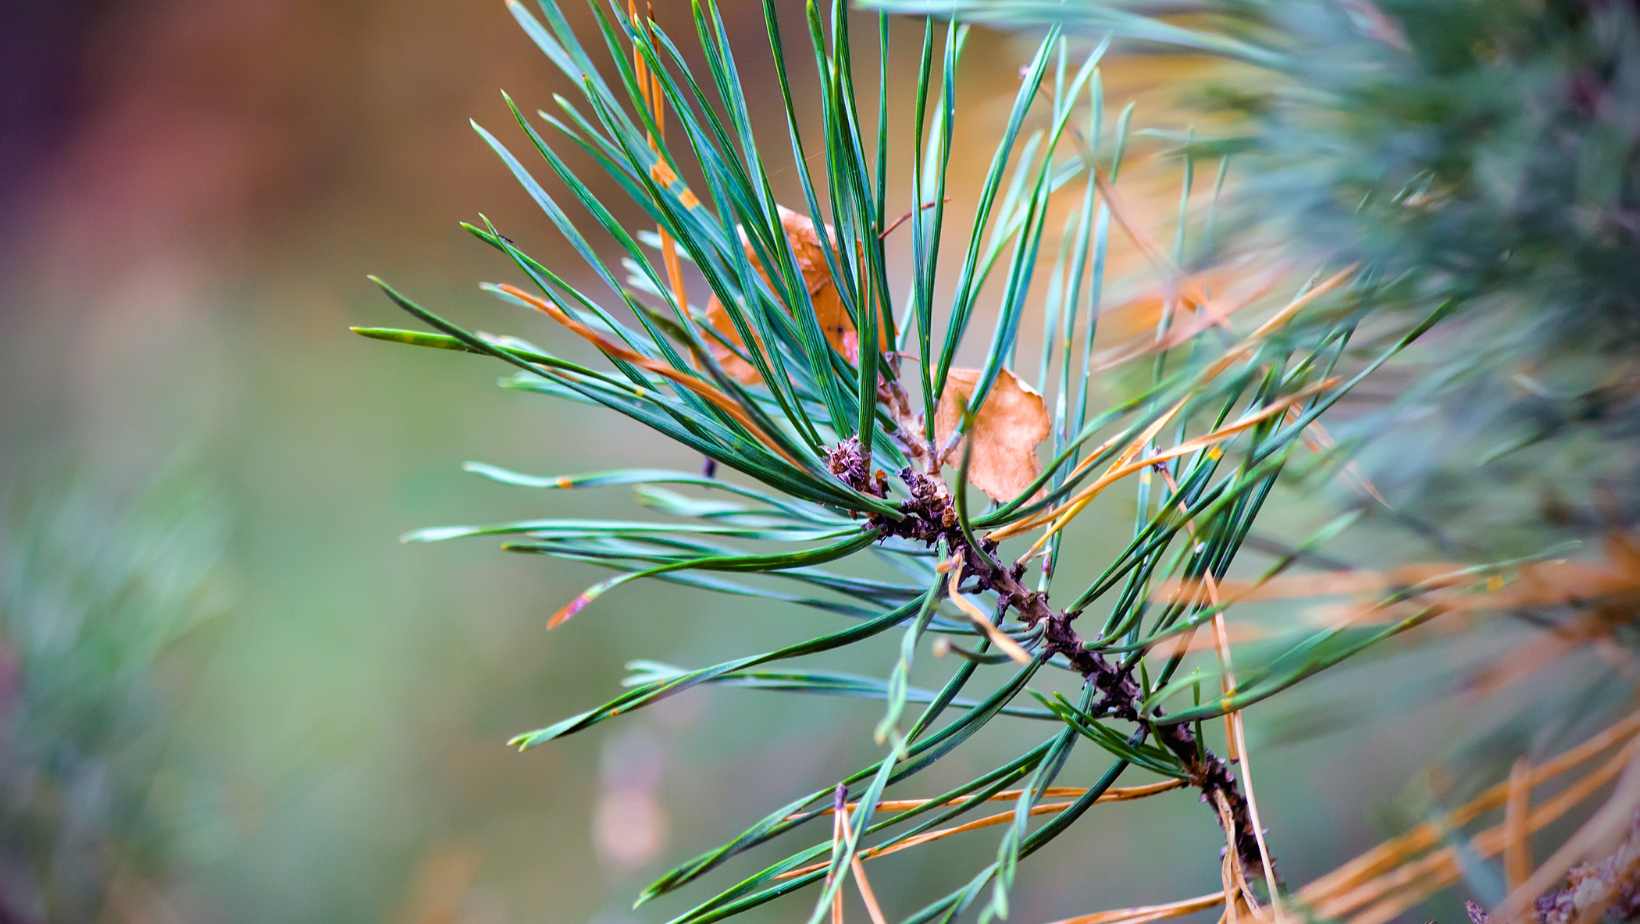 Pine tree needles symbolizing the terpene pinene found in cannabis.